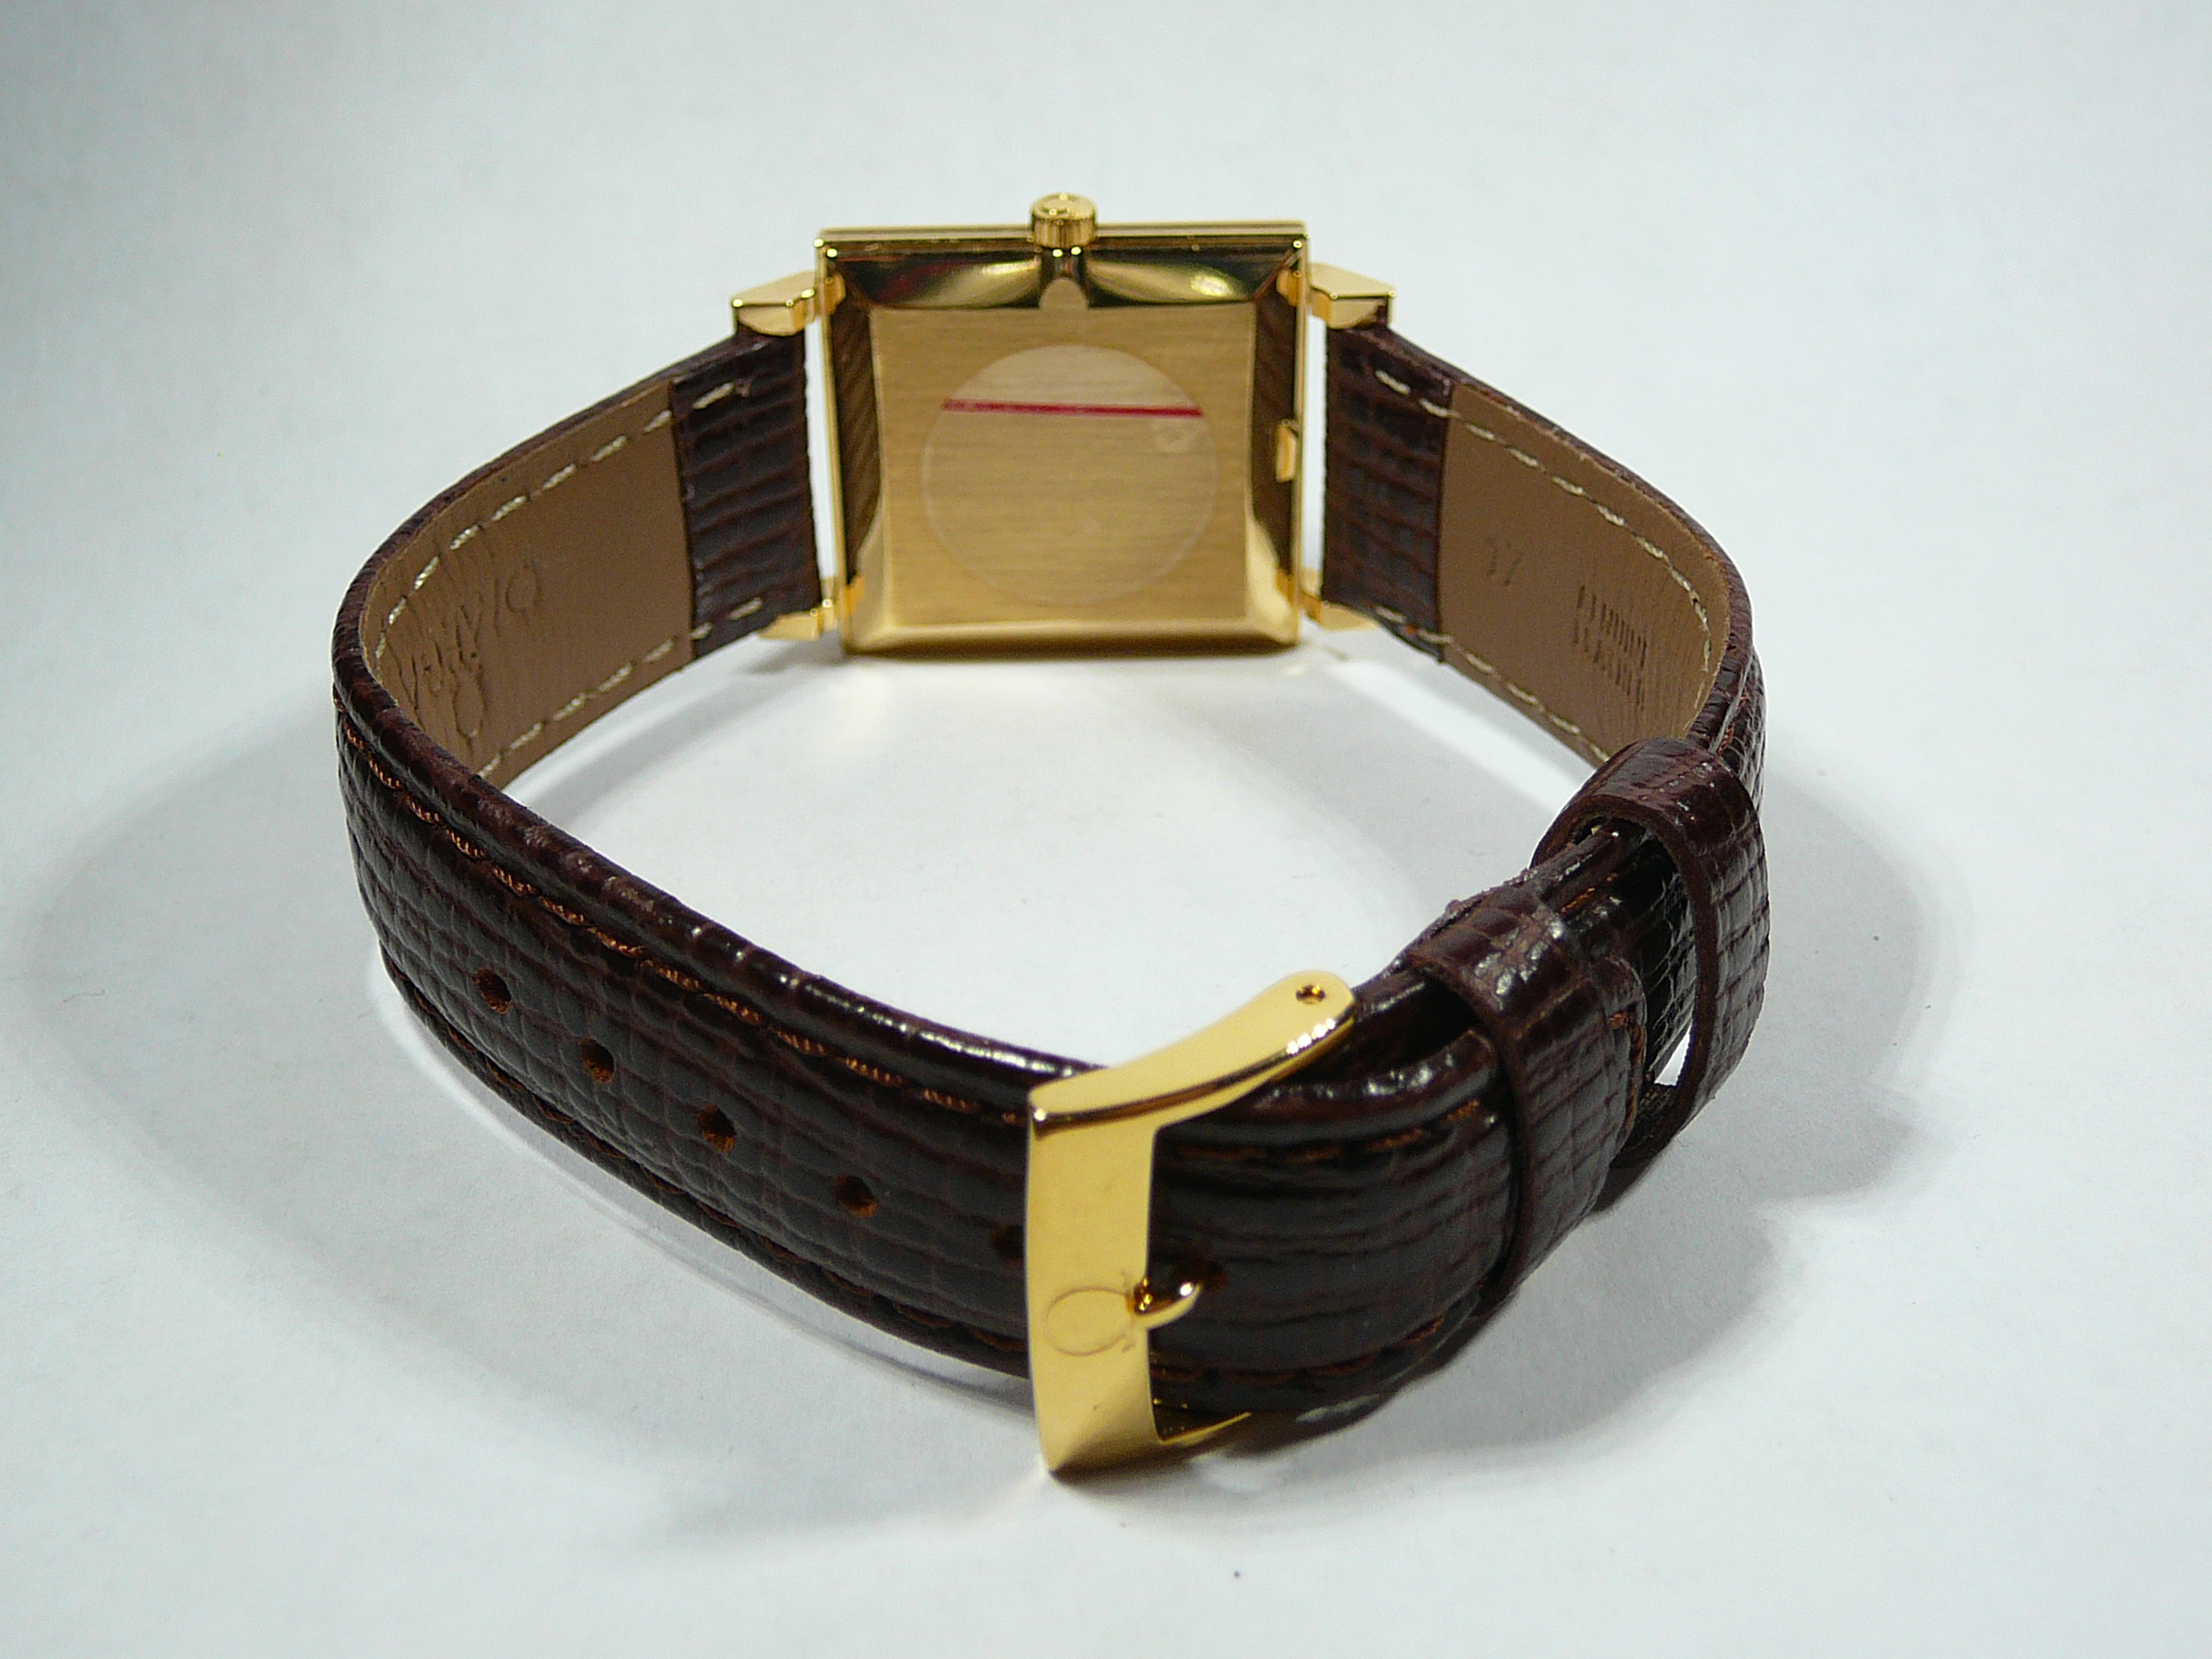 Ladies Vintage Gold Omega Wrist Watch - Image 3 of 3